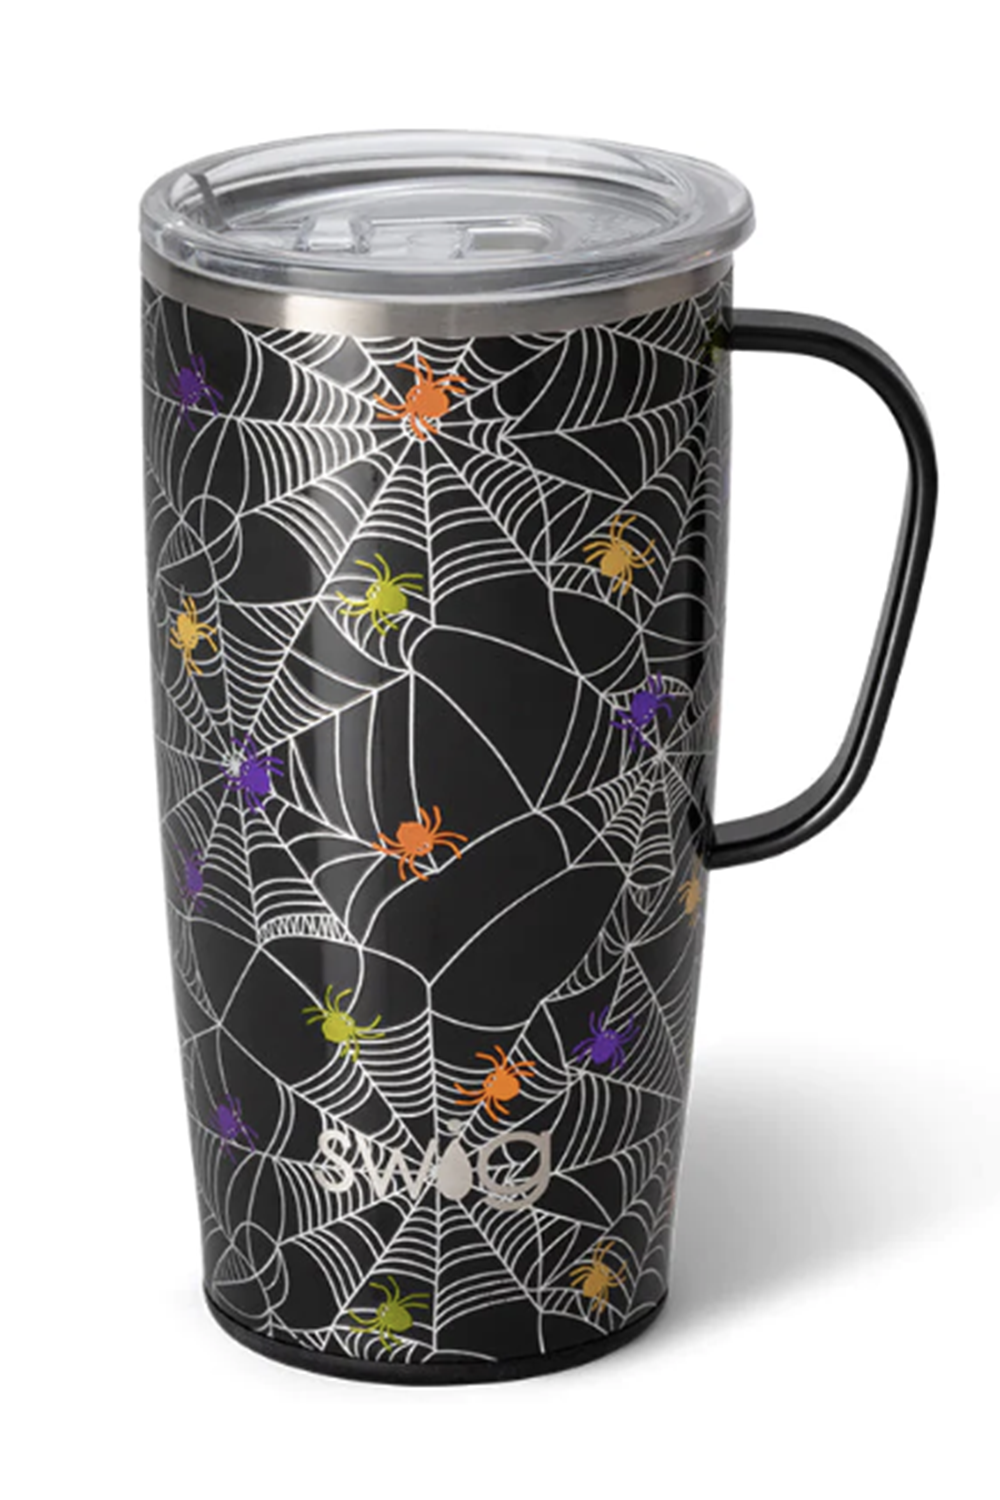 TALL Modern Coffee Mug - Itsy Bitsy Spider